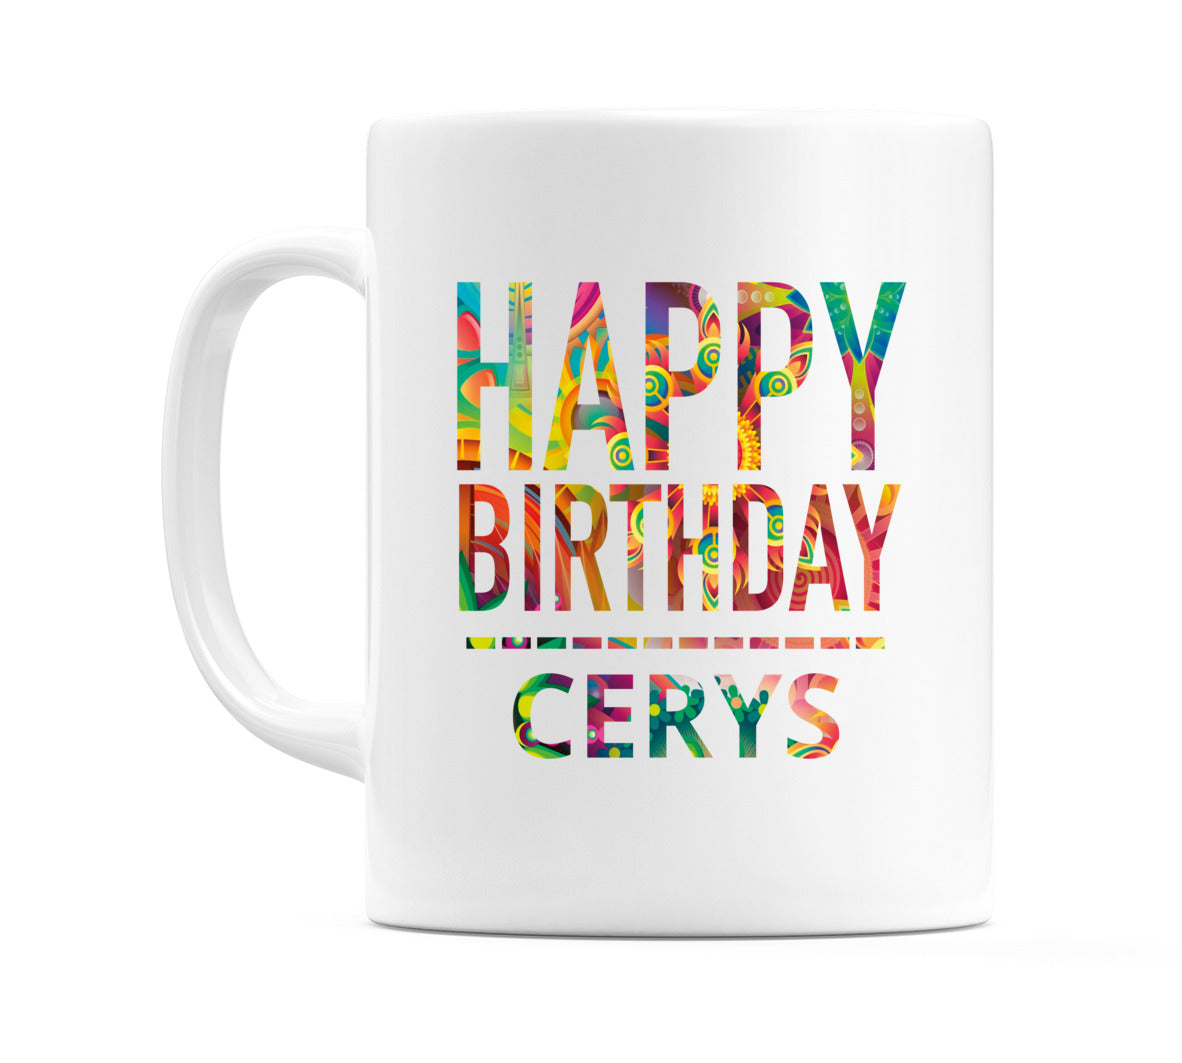 Happy Birthday Cerys (Tie Dye Effect) Mug Cup by WeDoMugs